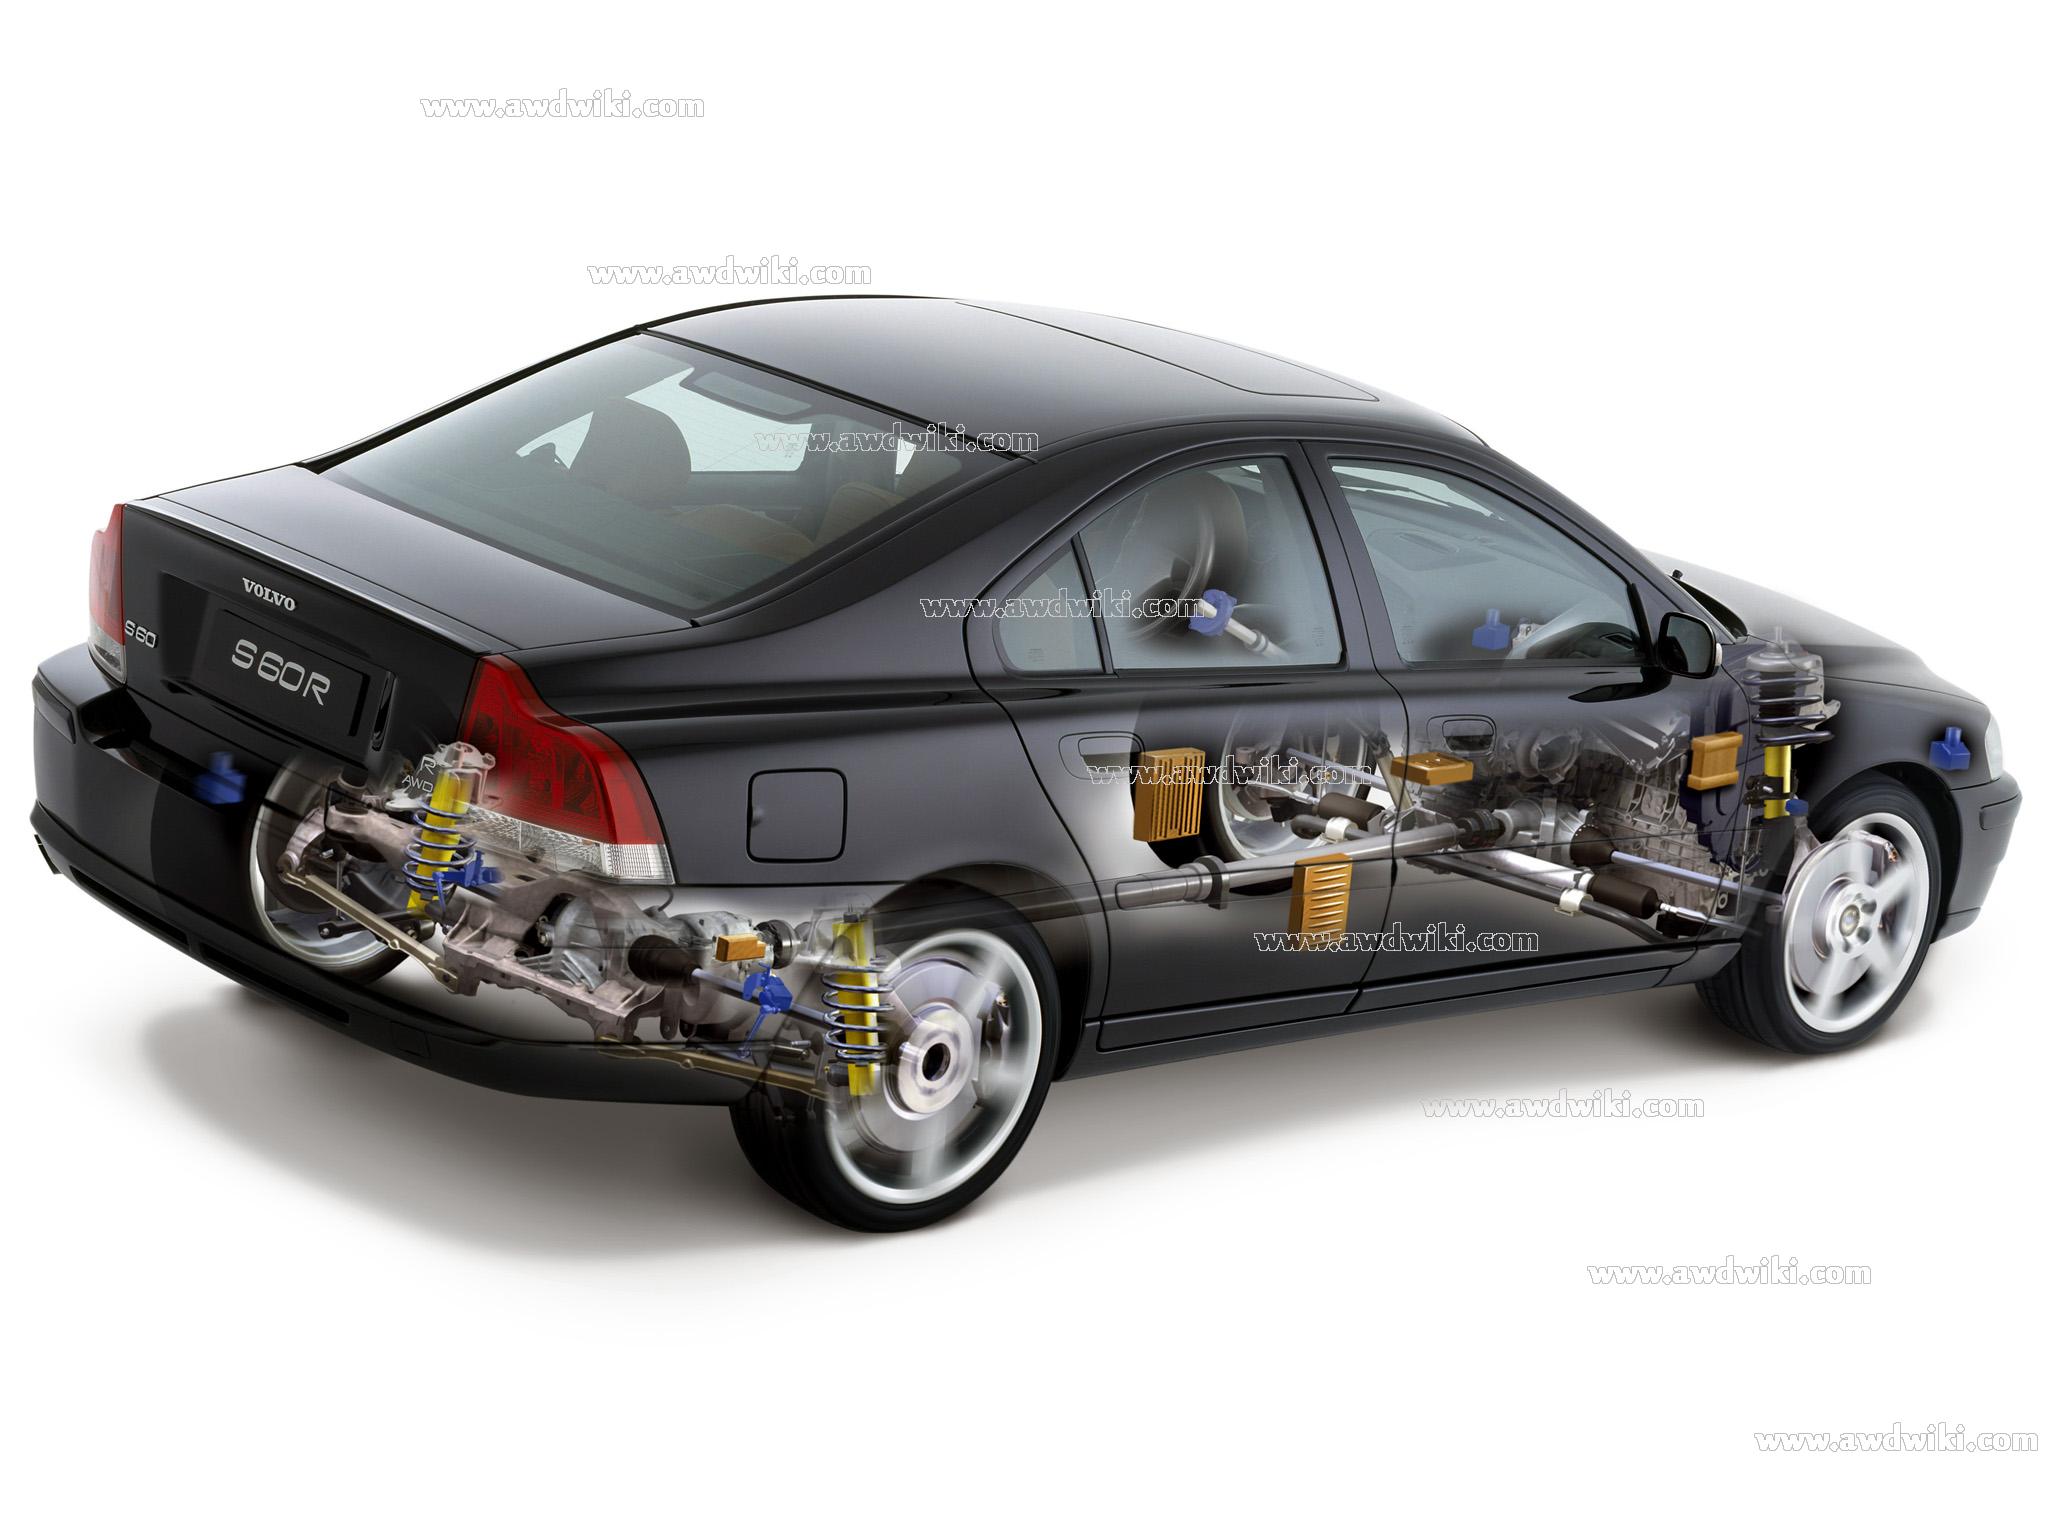 Volvo полный привод | awd авто, 4x4 машины, 4wd автомобили, 4motion,  quattro, xDrive, SH-AWD, Haldex, Torsen, wiki - Устройство полного привода